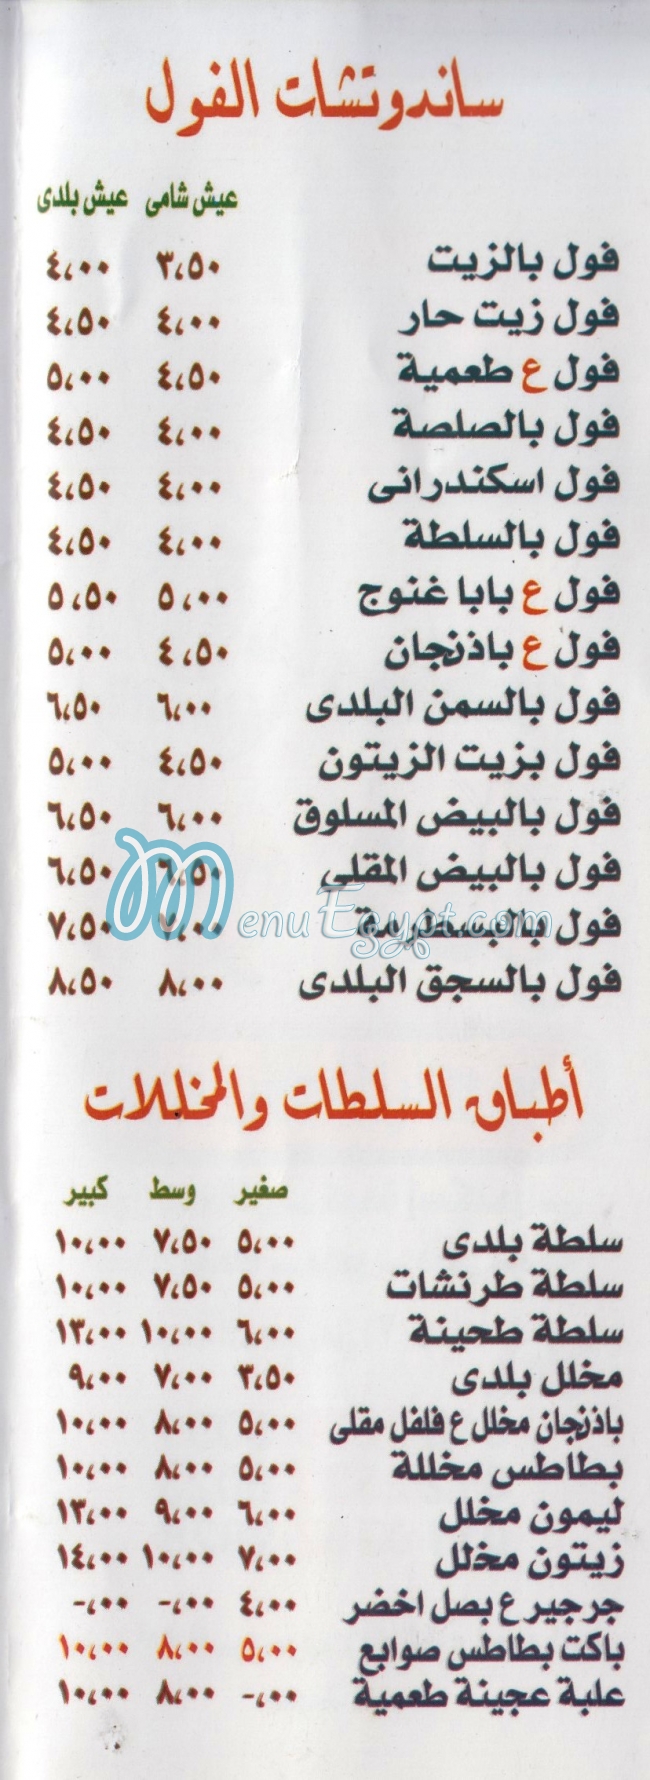 Abo Ali menu prices